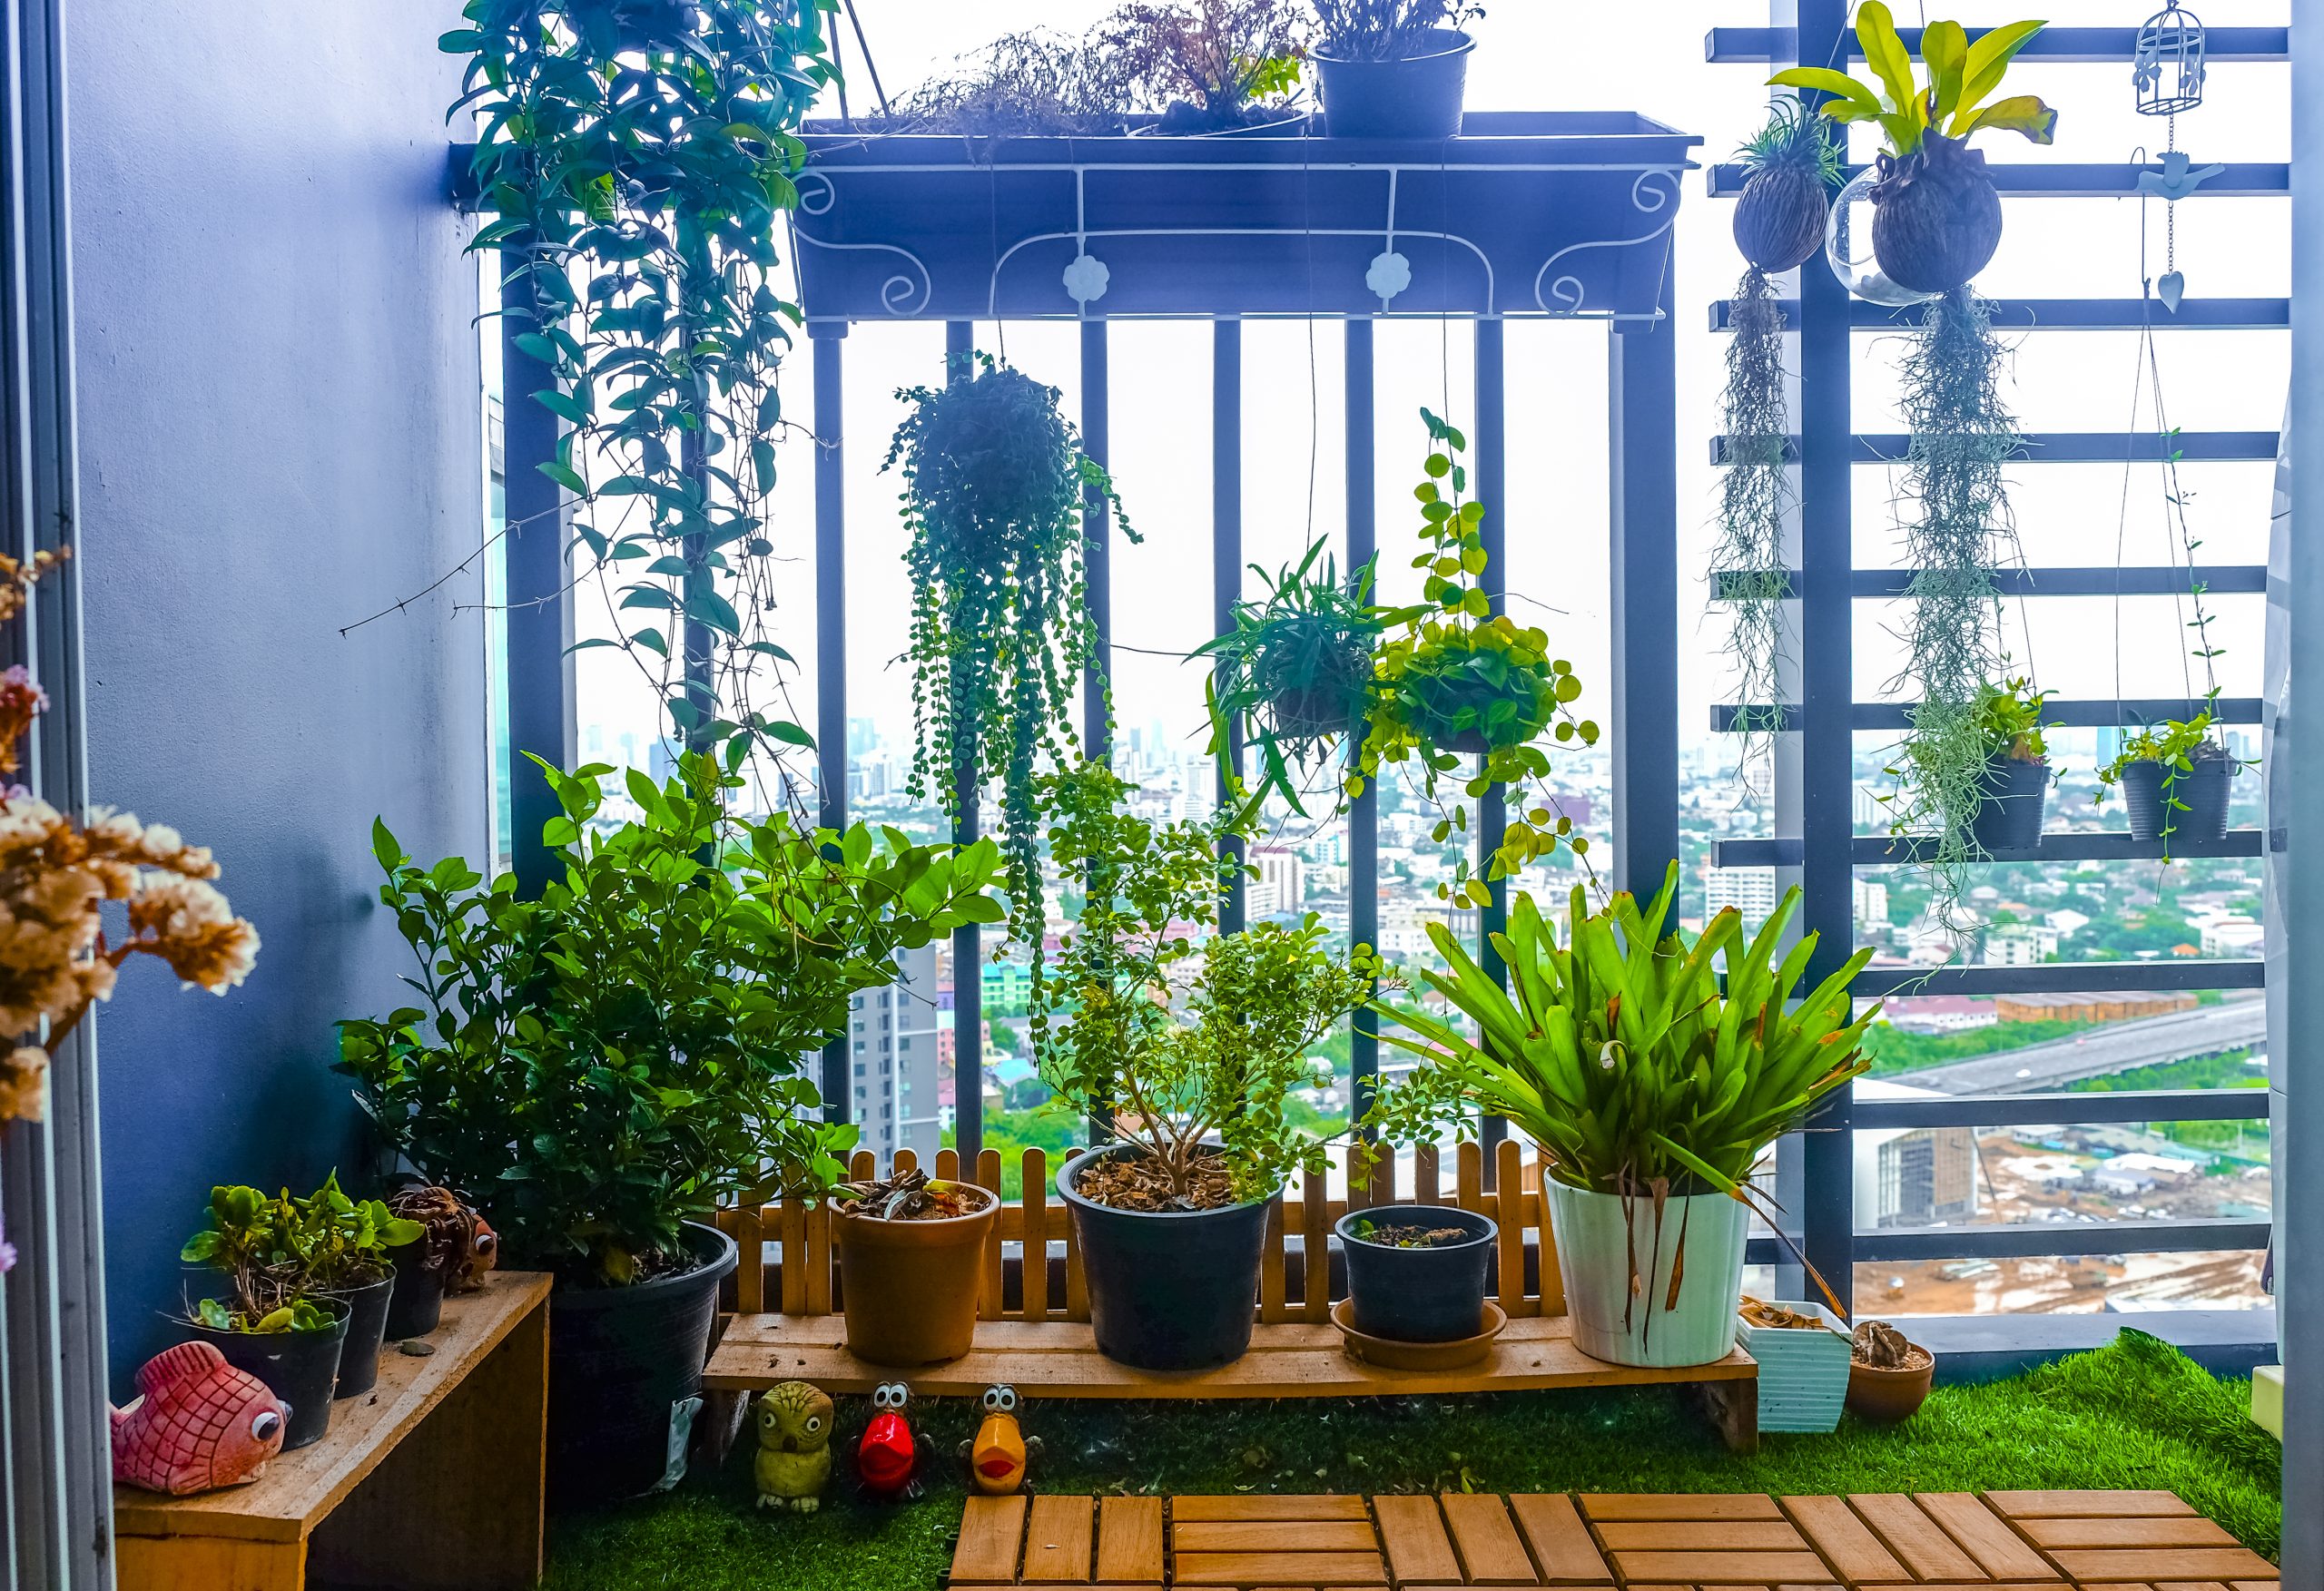 Home Garden for a Healthy Lifestyle